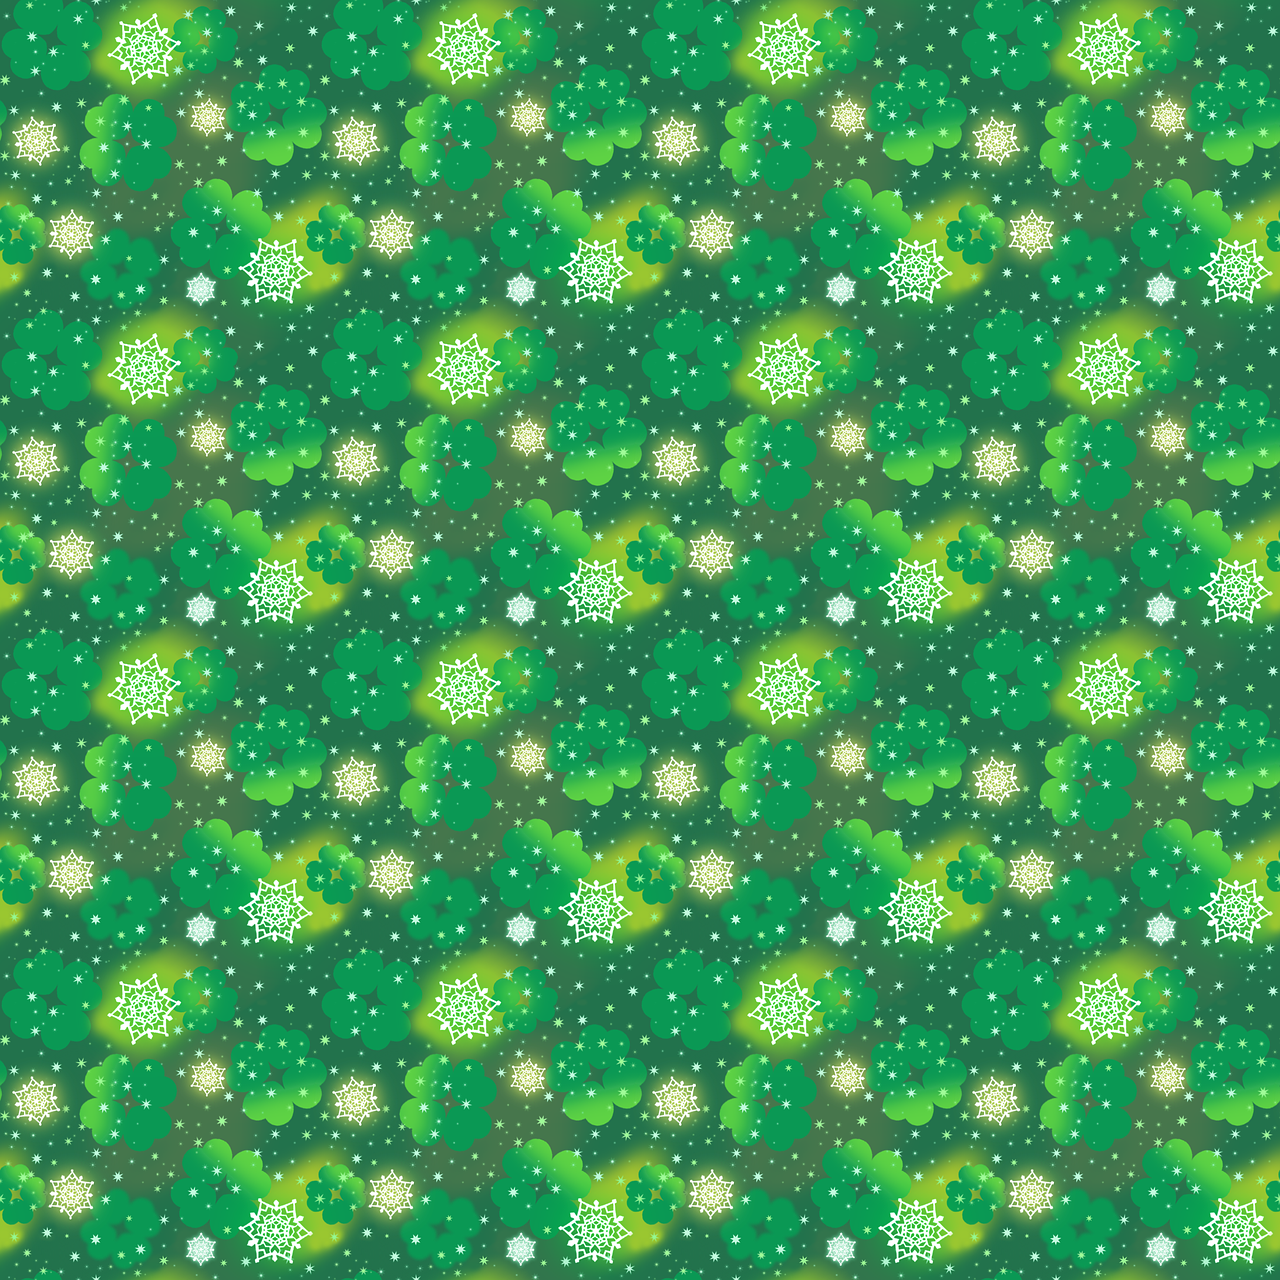 4-leaf clover star glitter free photo